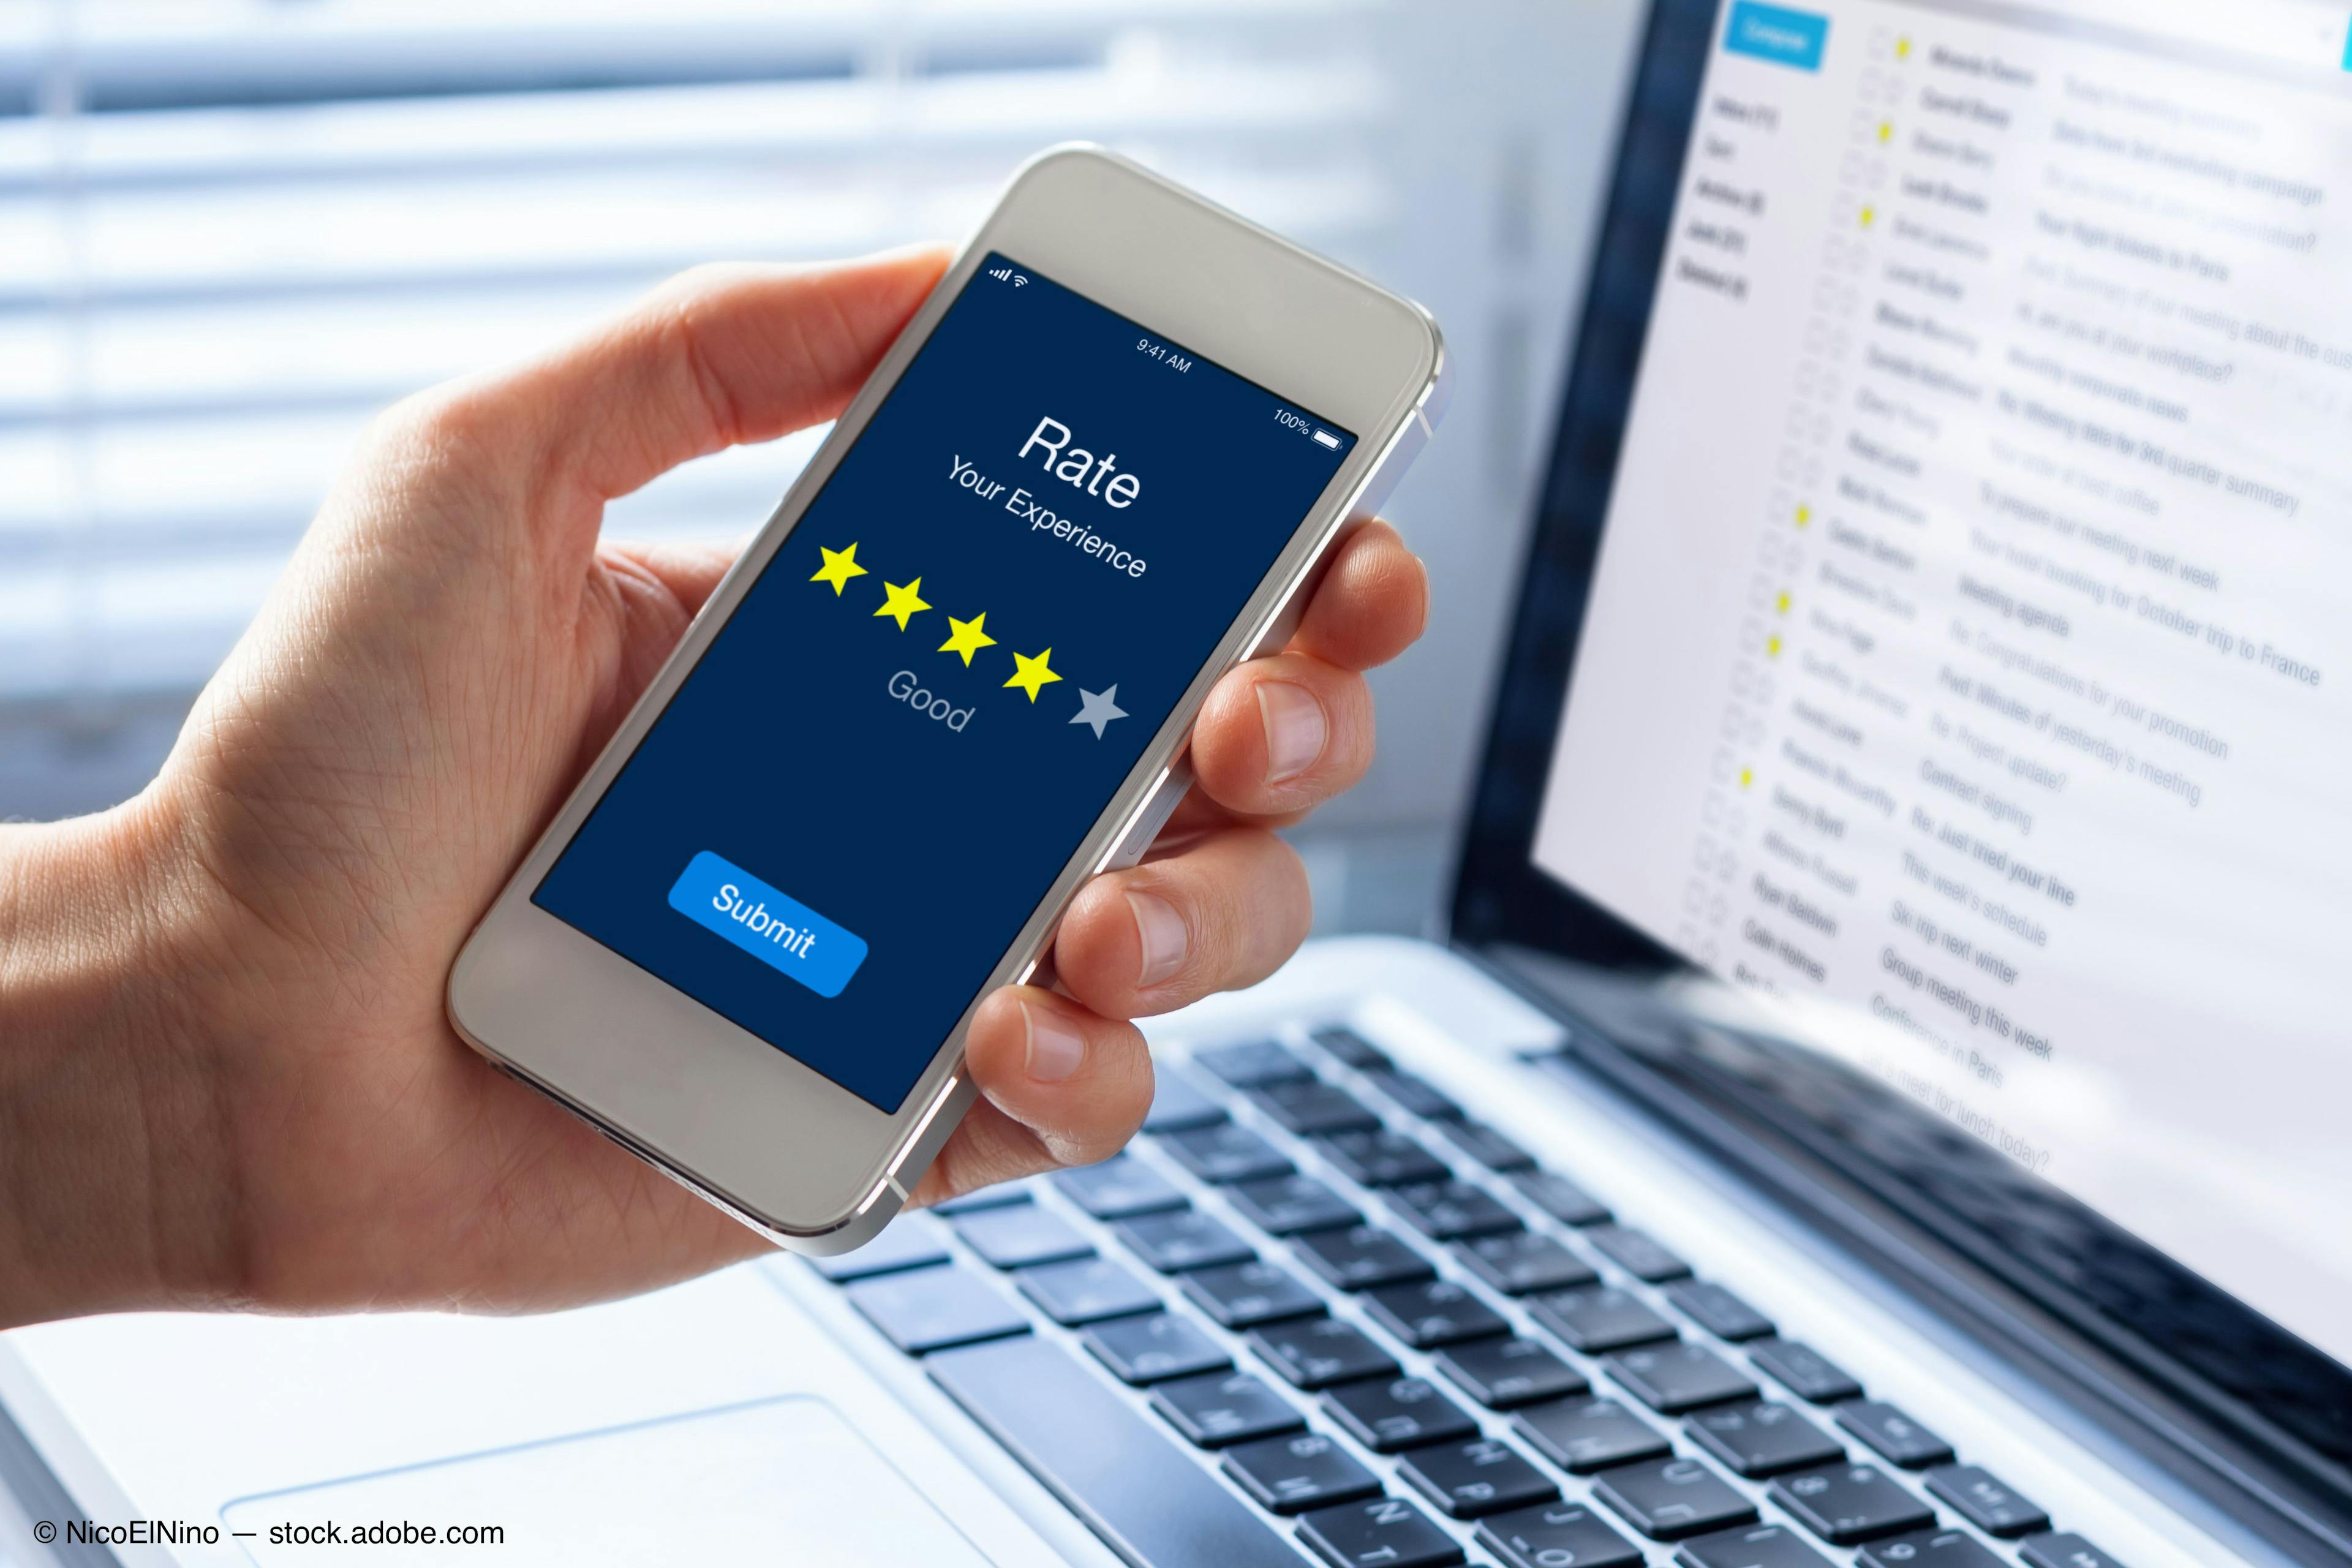 Do online ratings help patients find better doctors?